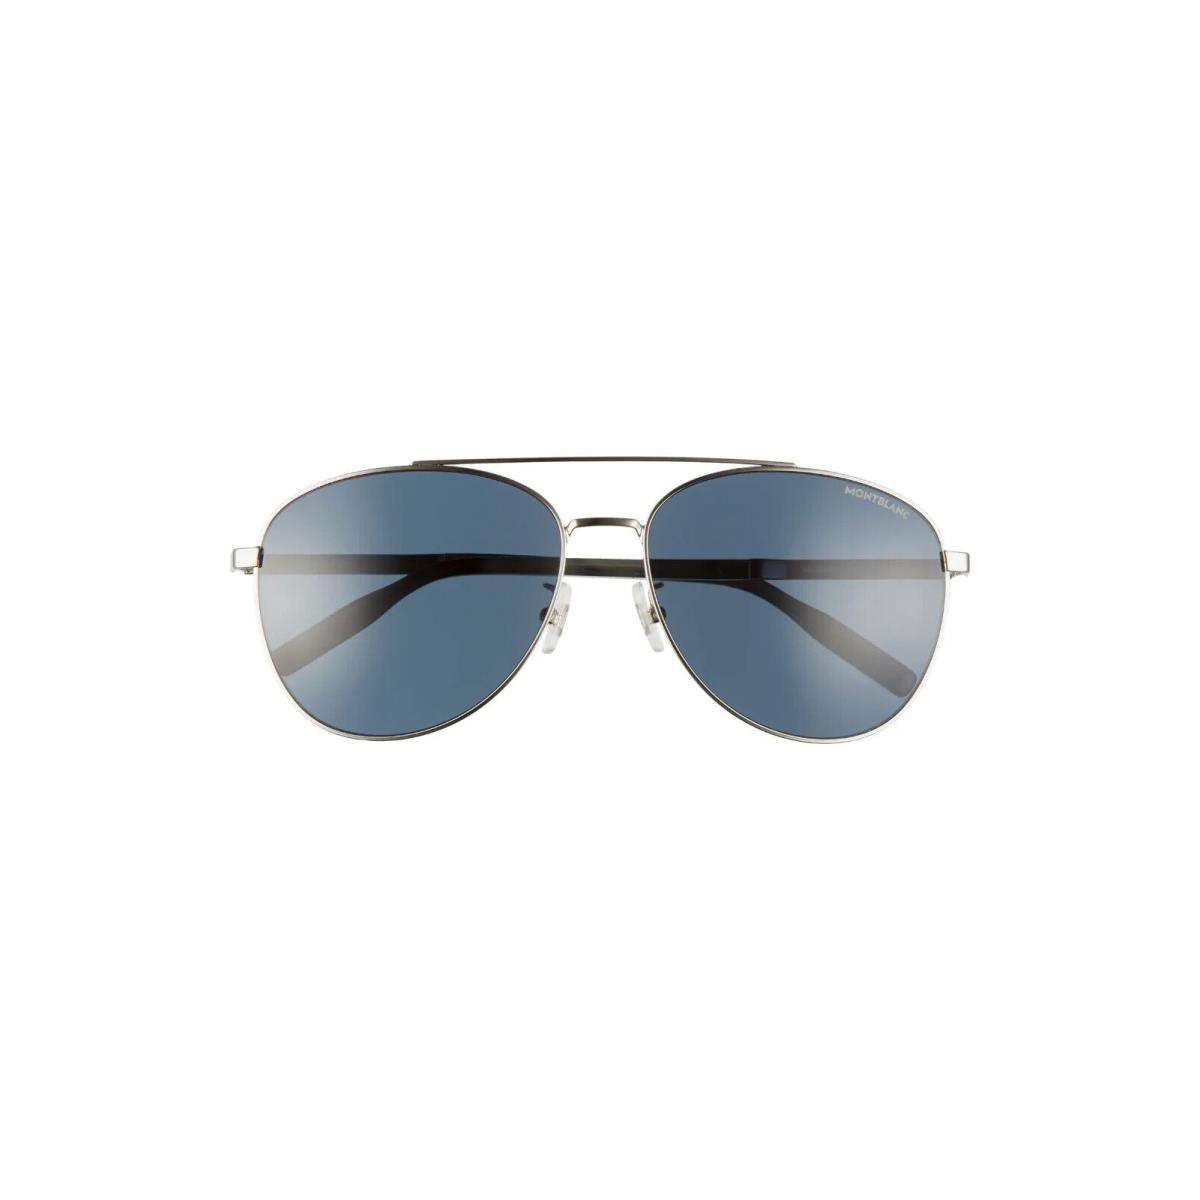 Montblanc S2621 Mens Grey Brow Bar Aviator Sunglasses 61mm